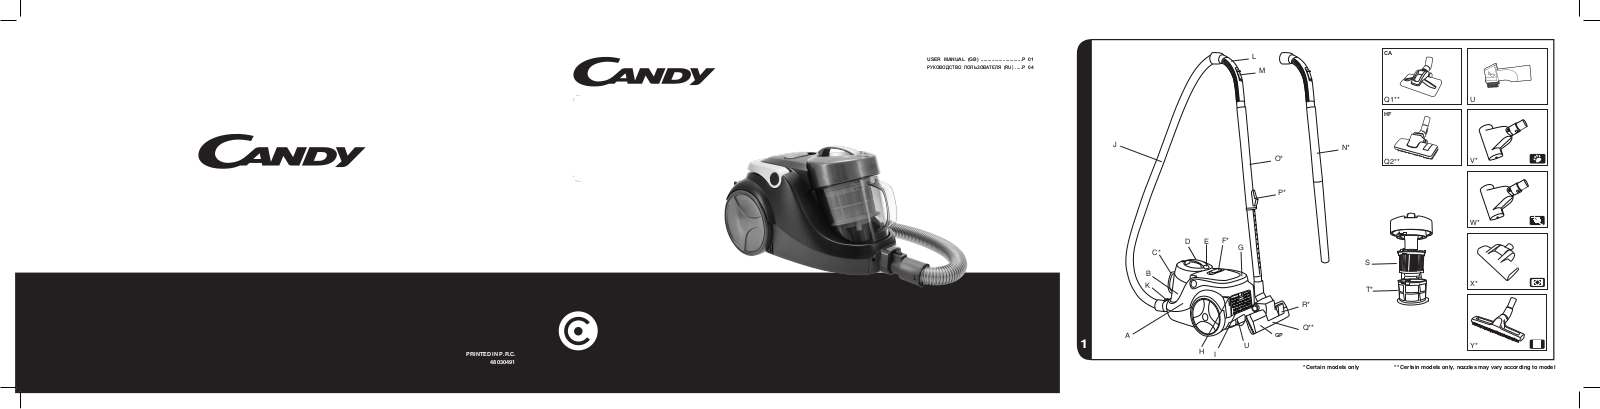 Candy CAF1020 019, CAF1014 019 Manual